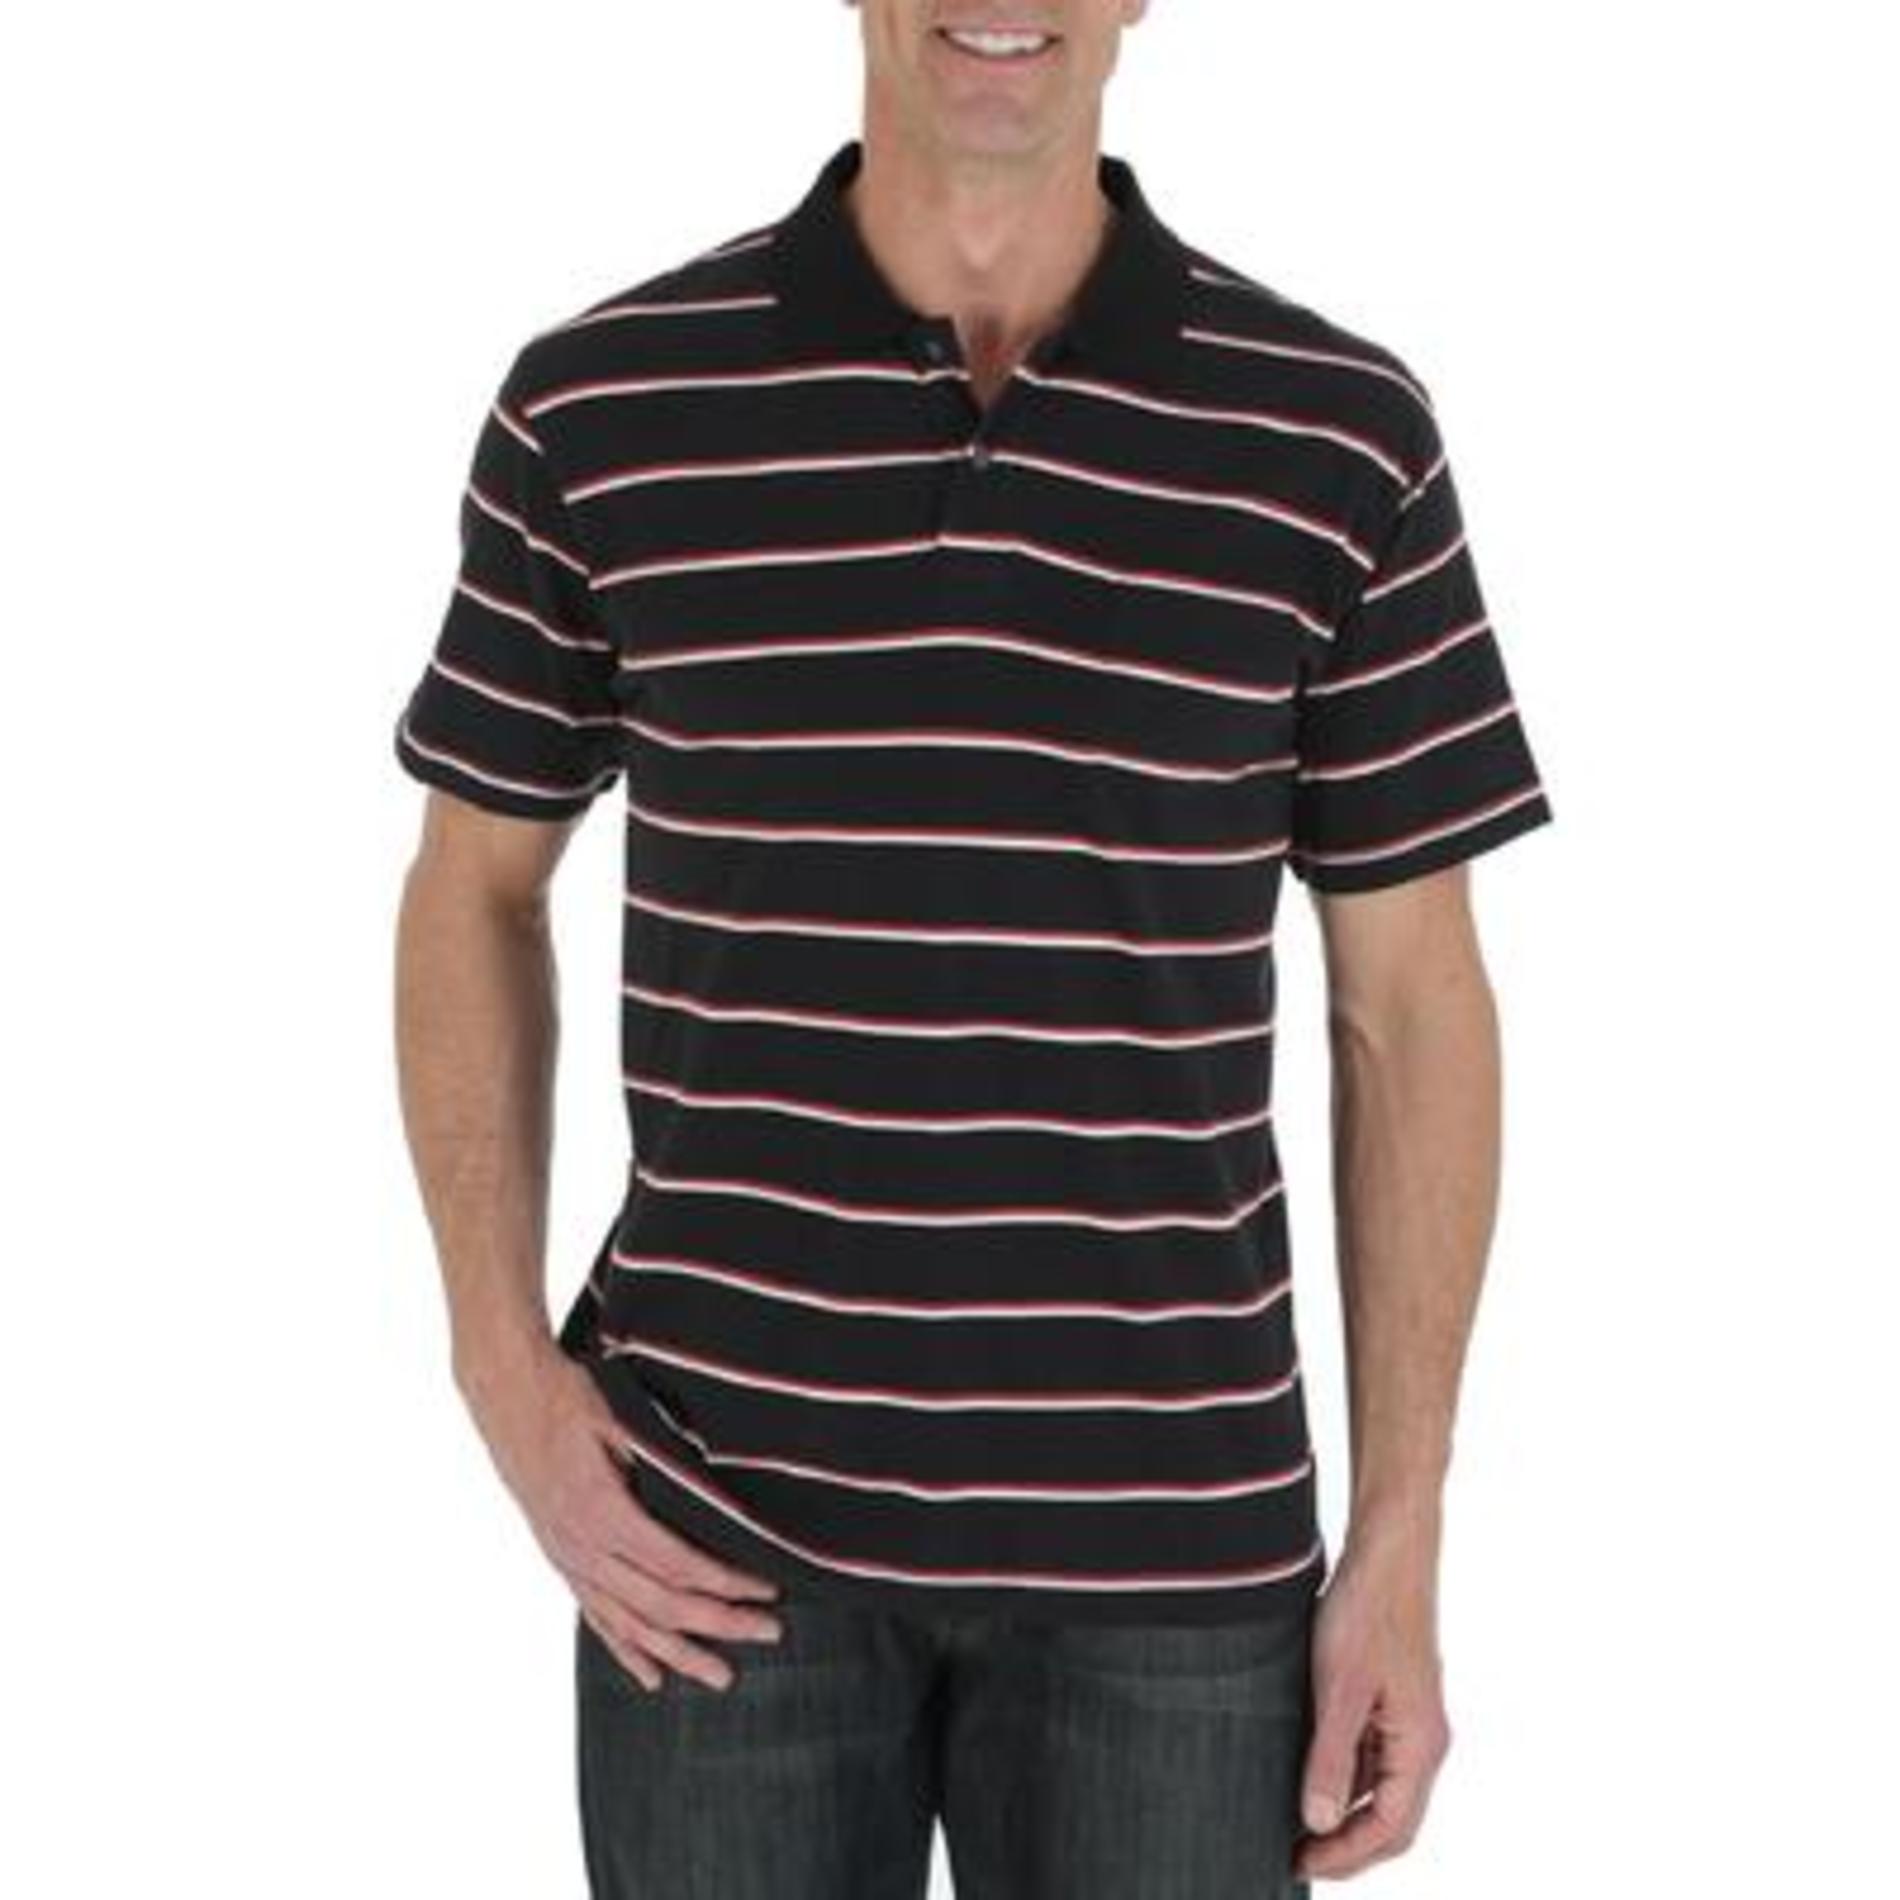 Men's Big & Tall Knit Polo Shirt - Striped